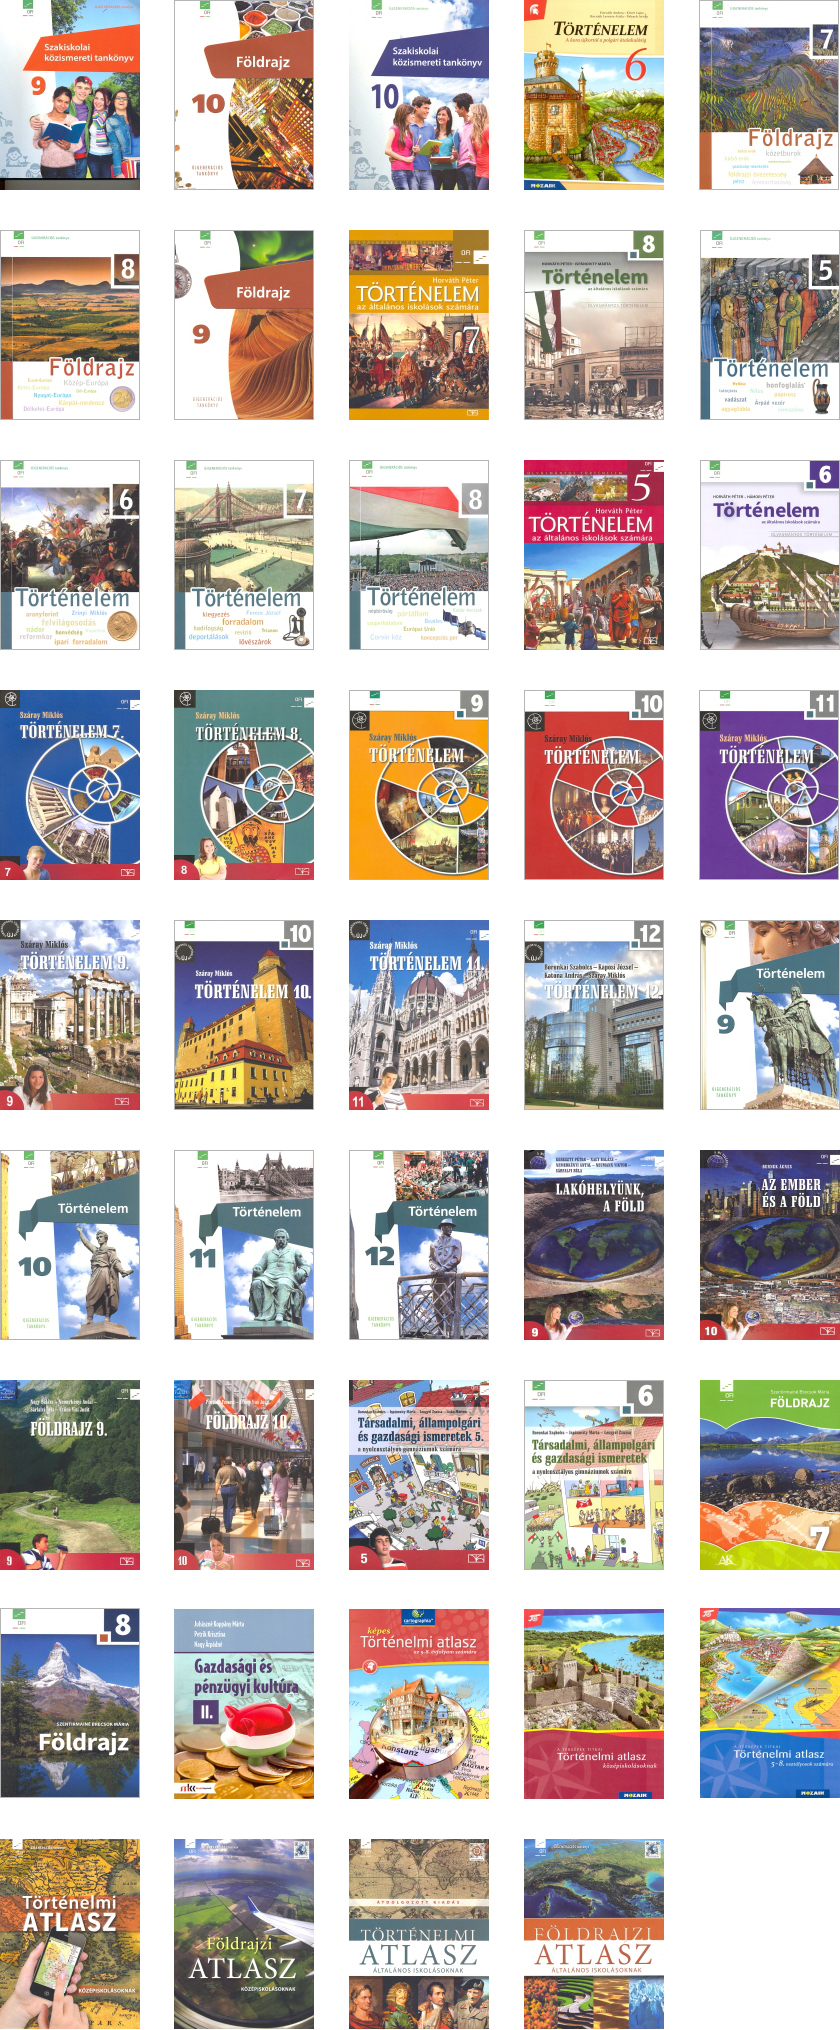 Image - Hungary Textbooks